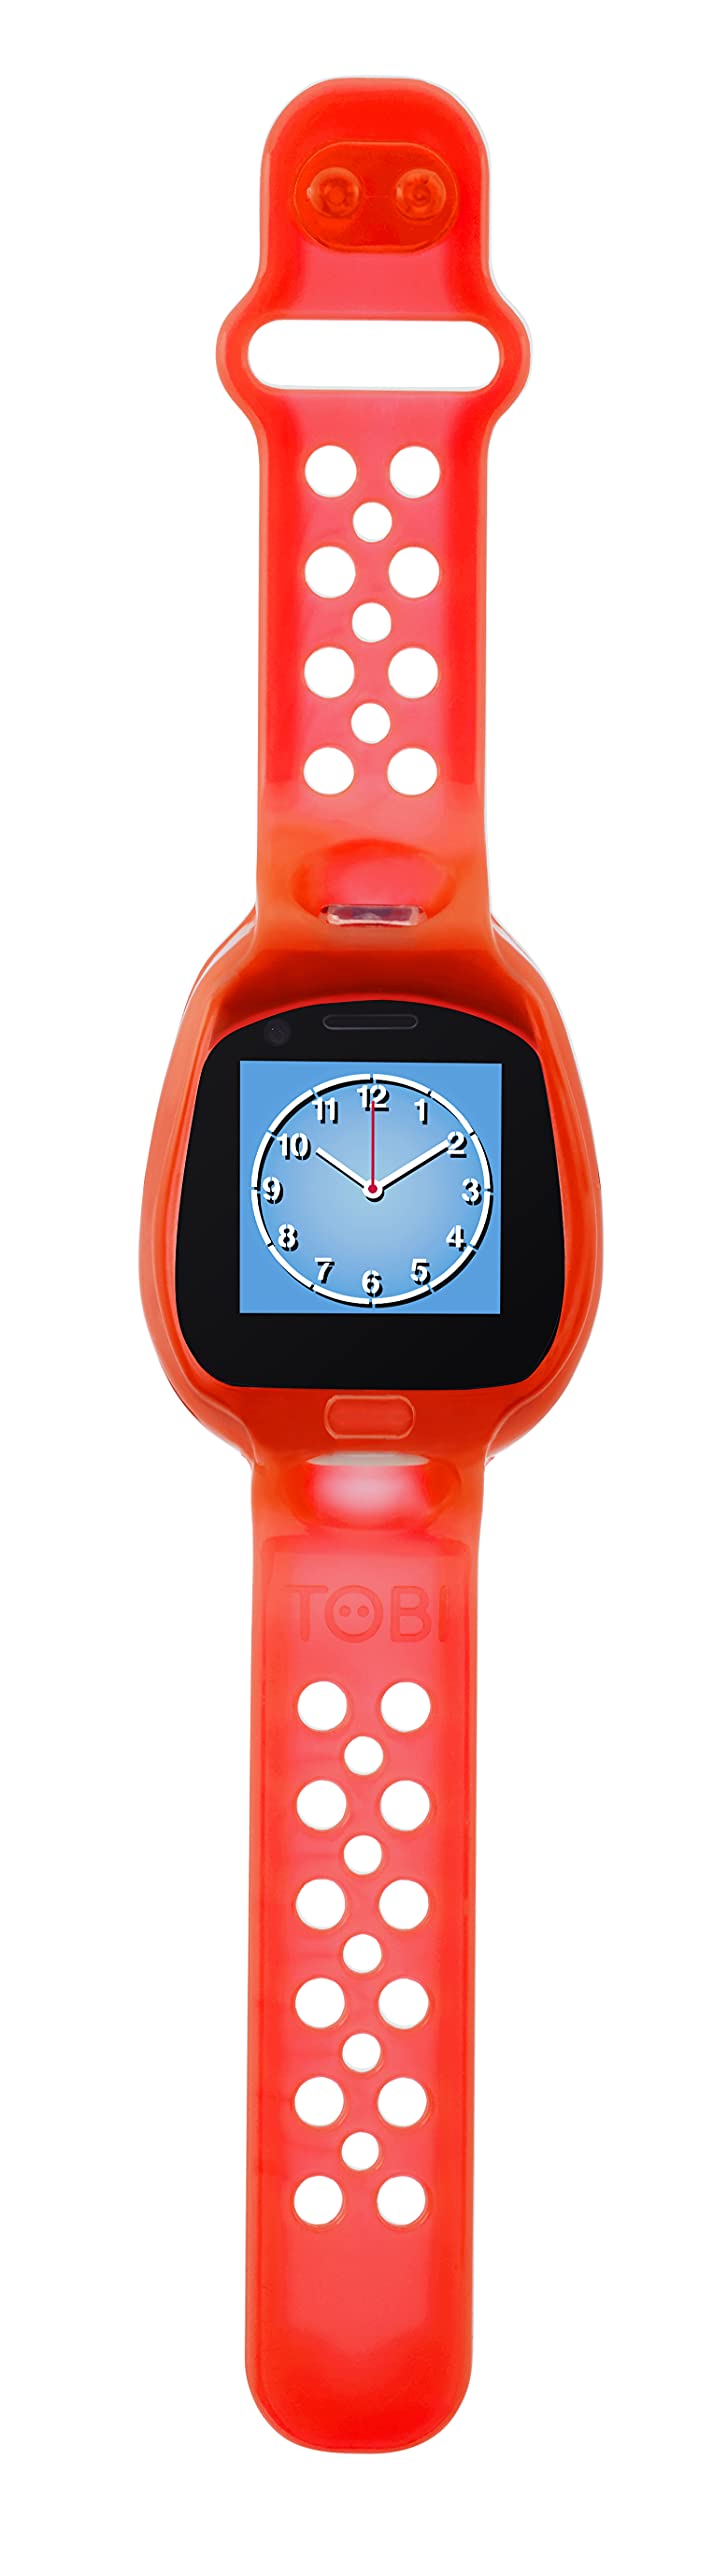 Little Tikes Tobi 2 Robot Red Smartwatch- 2 Cameras, Interactive Robot, Games, Videos, Selfies, Pedometer & More, Touchscreen, Parental Control- Stem Gifts, for Kids Boys Girls 6 7 8+